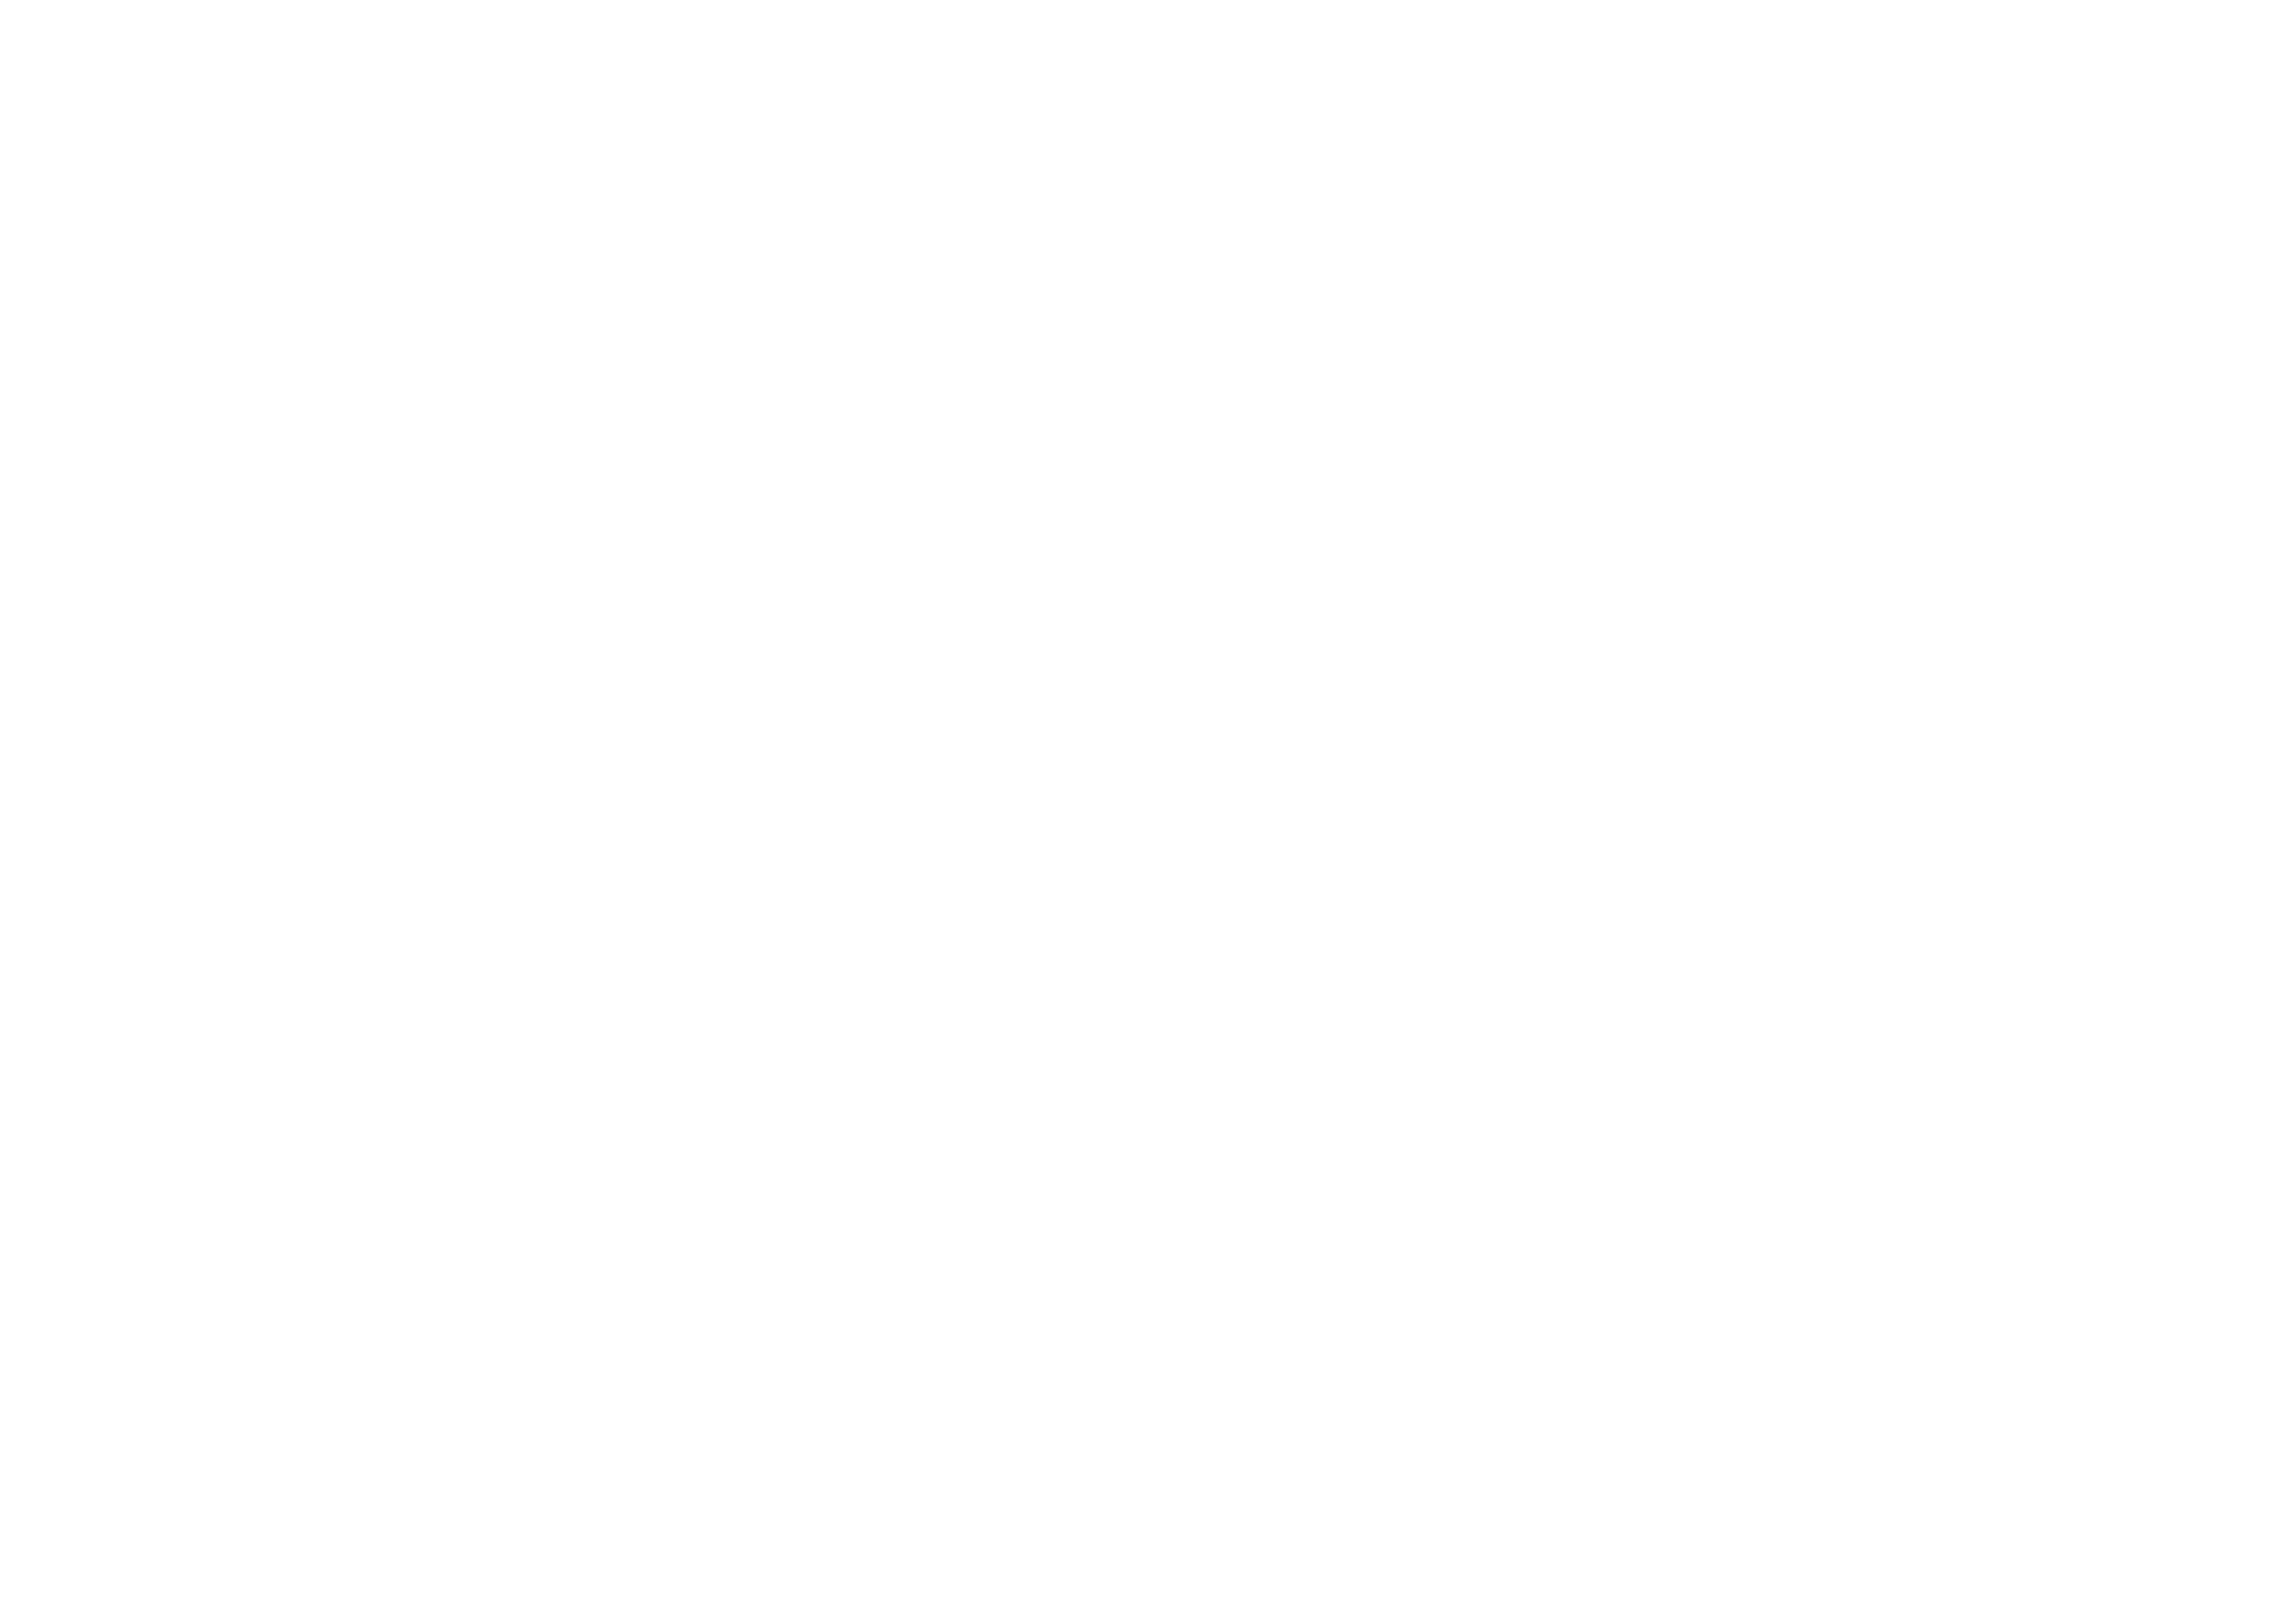 Kumij_logo_2020_RGB_01